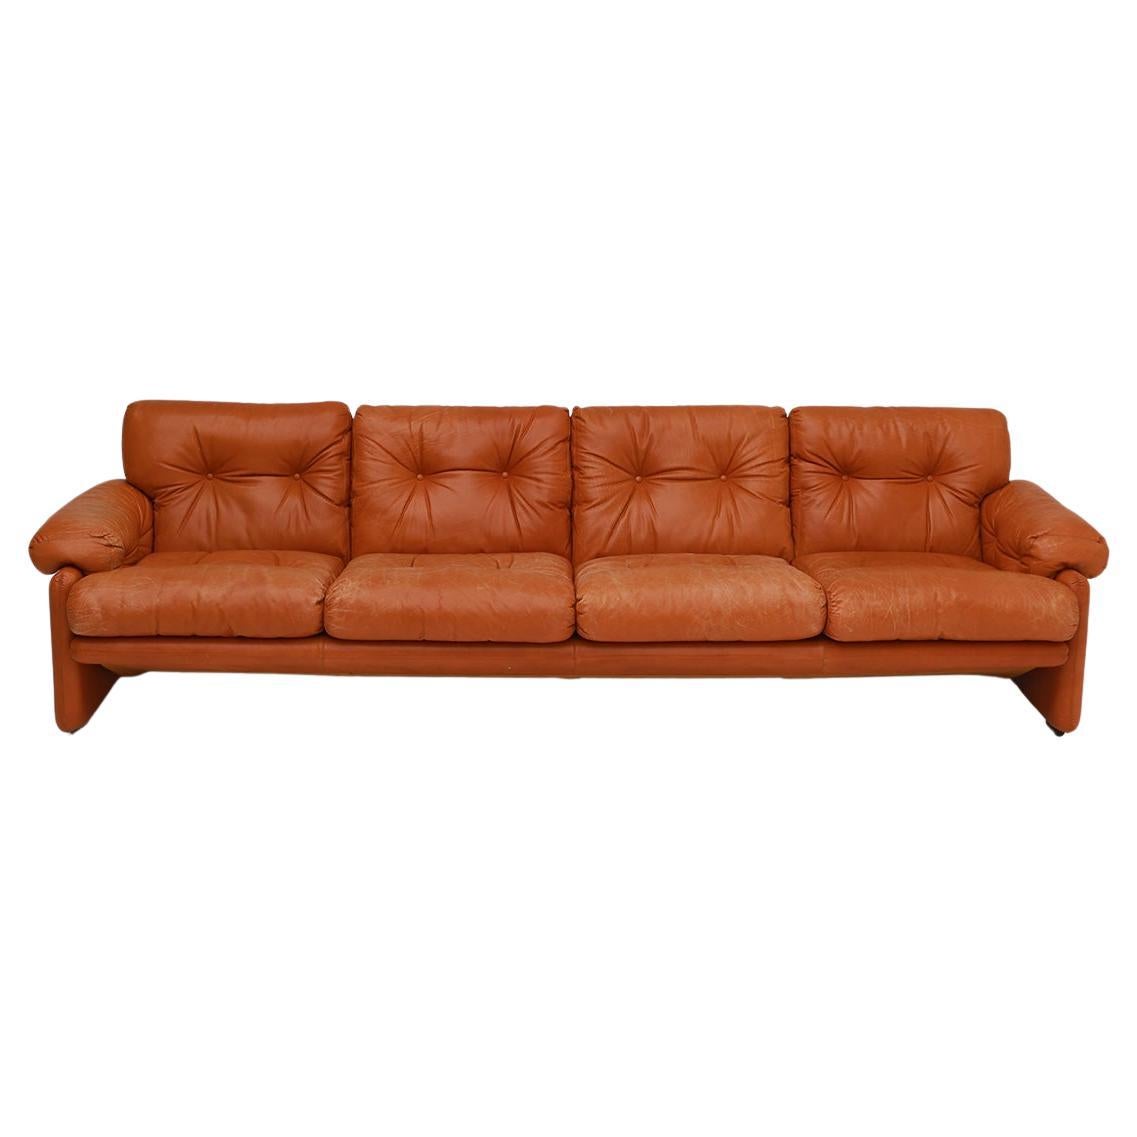 Mid-Century Cognac Leather 4 Seat Sofa by Tobia Scarpa for B&B Italia